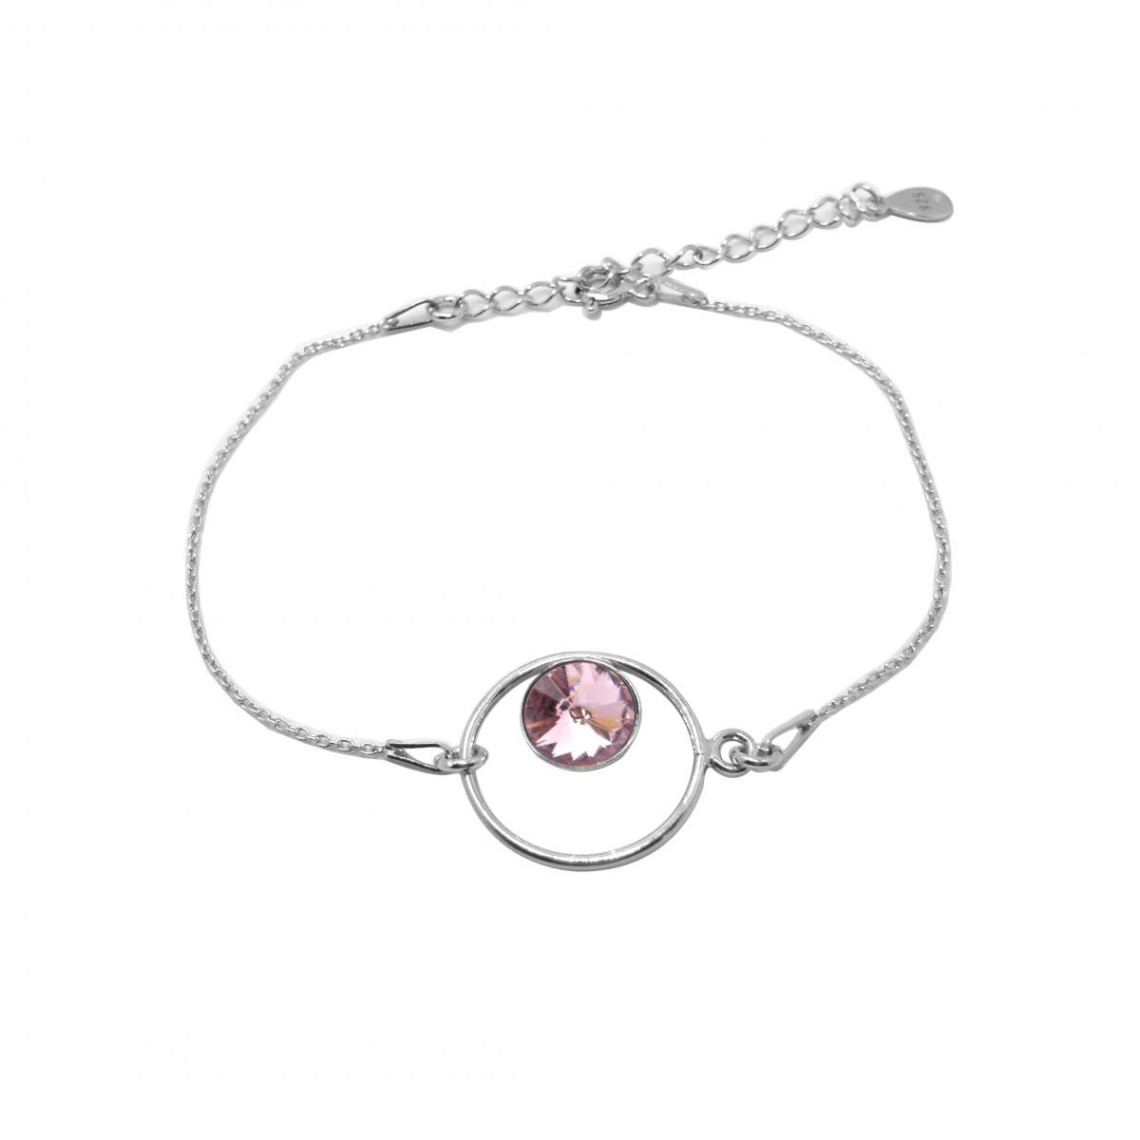 bracelet indicolite josephine brjose212 - bracelet argent a925/00 cristal swarovski violet indicolite